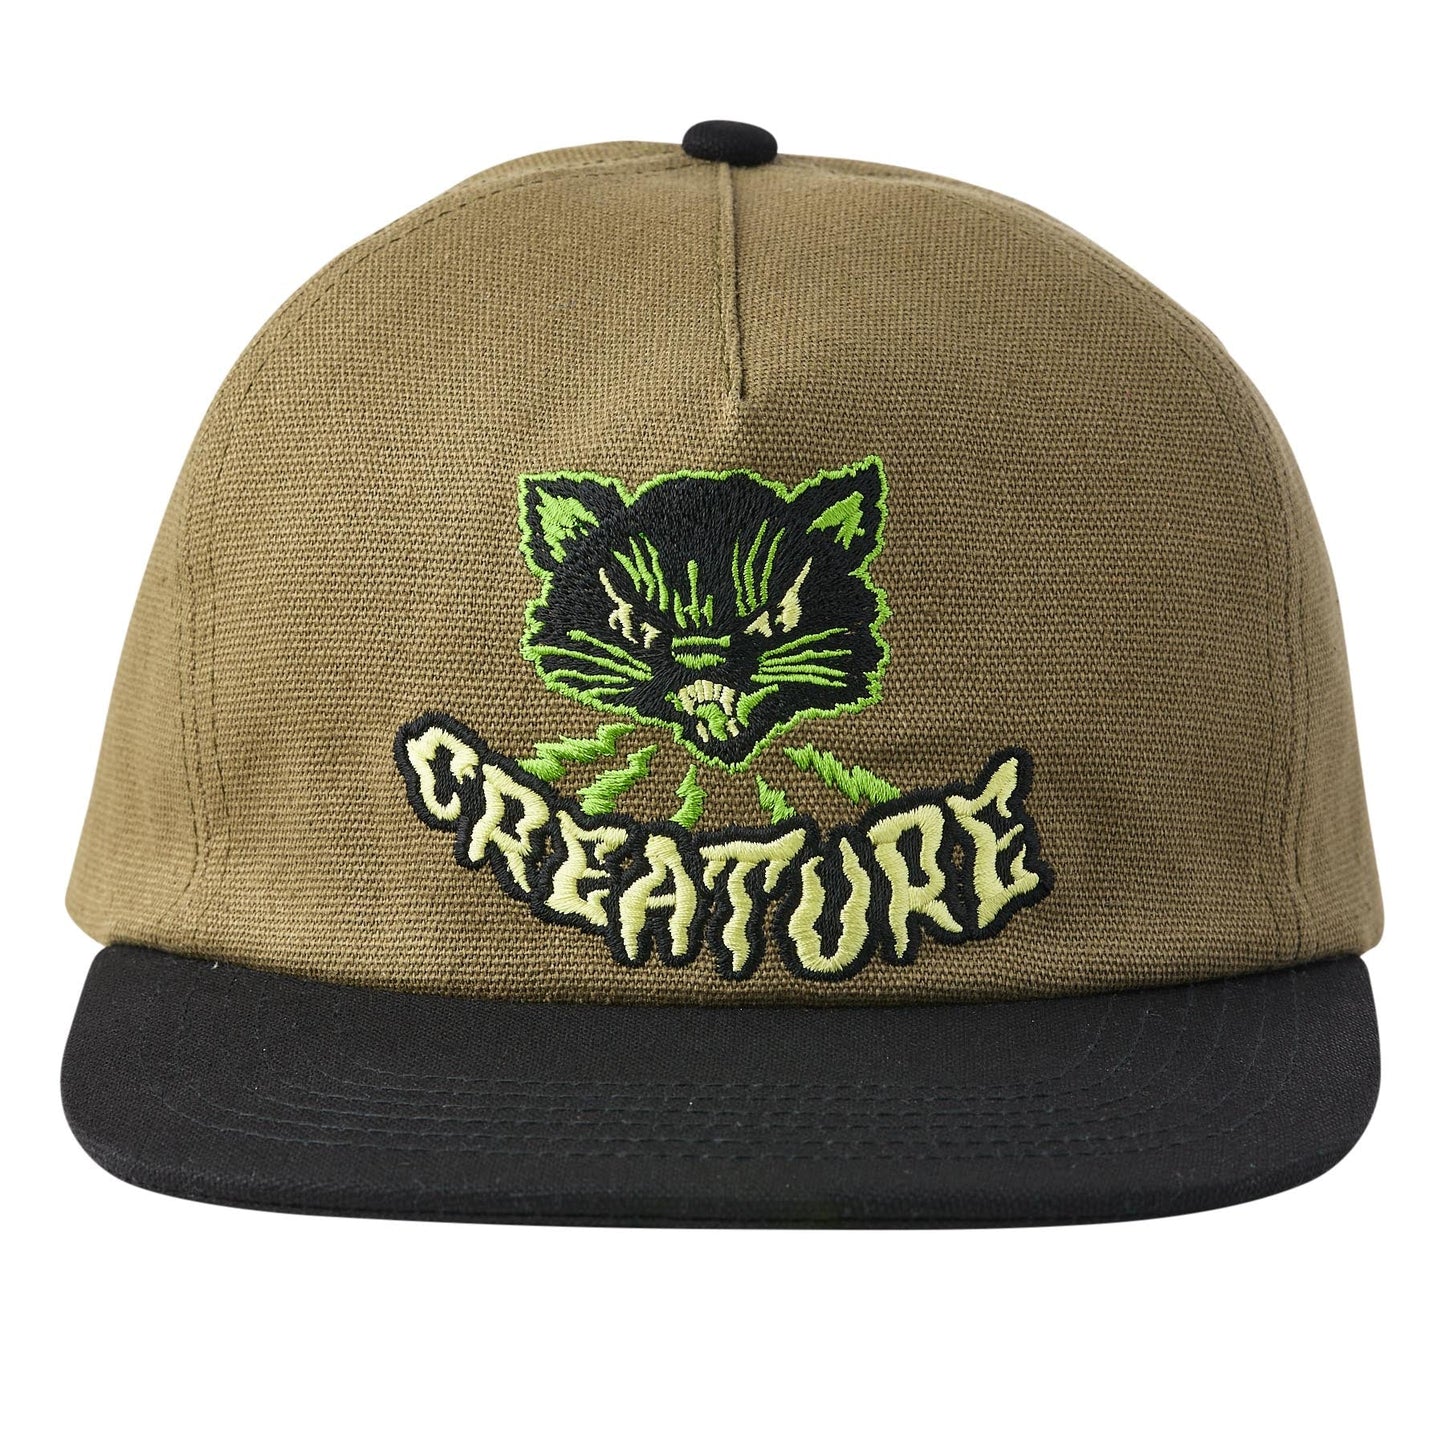 Creature The Creeper Hat - Olive/Black